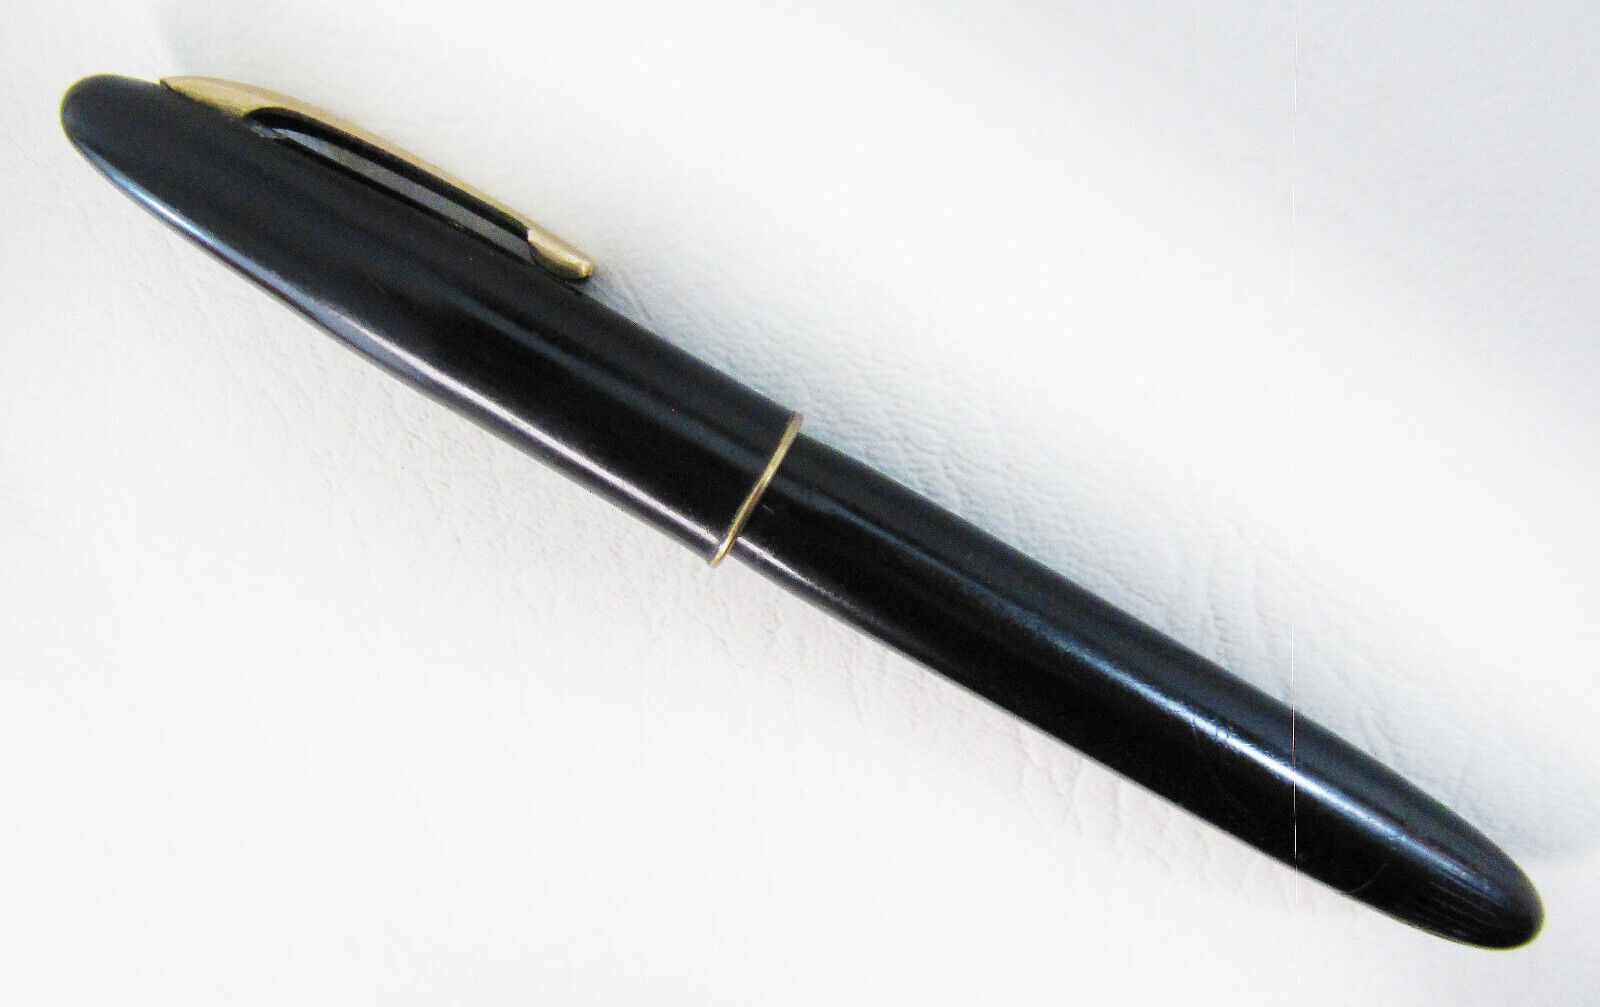 Vintage Schaeffer\'s Black And Gold Filled Pen With 14K Solid Gold Nib